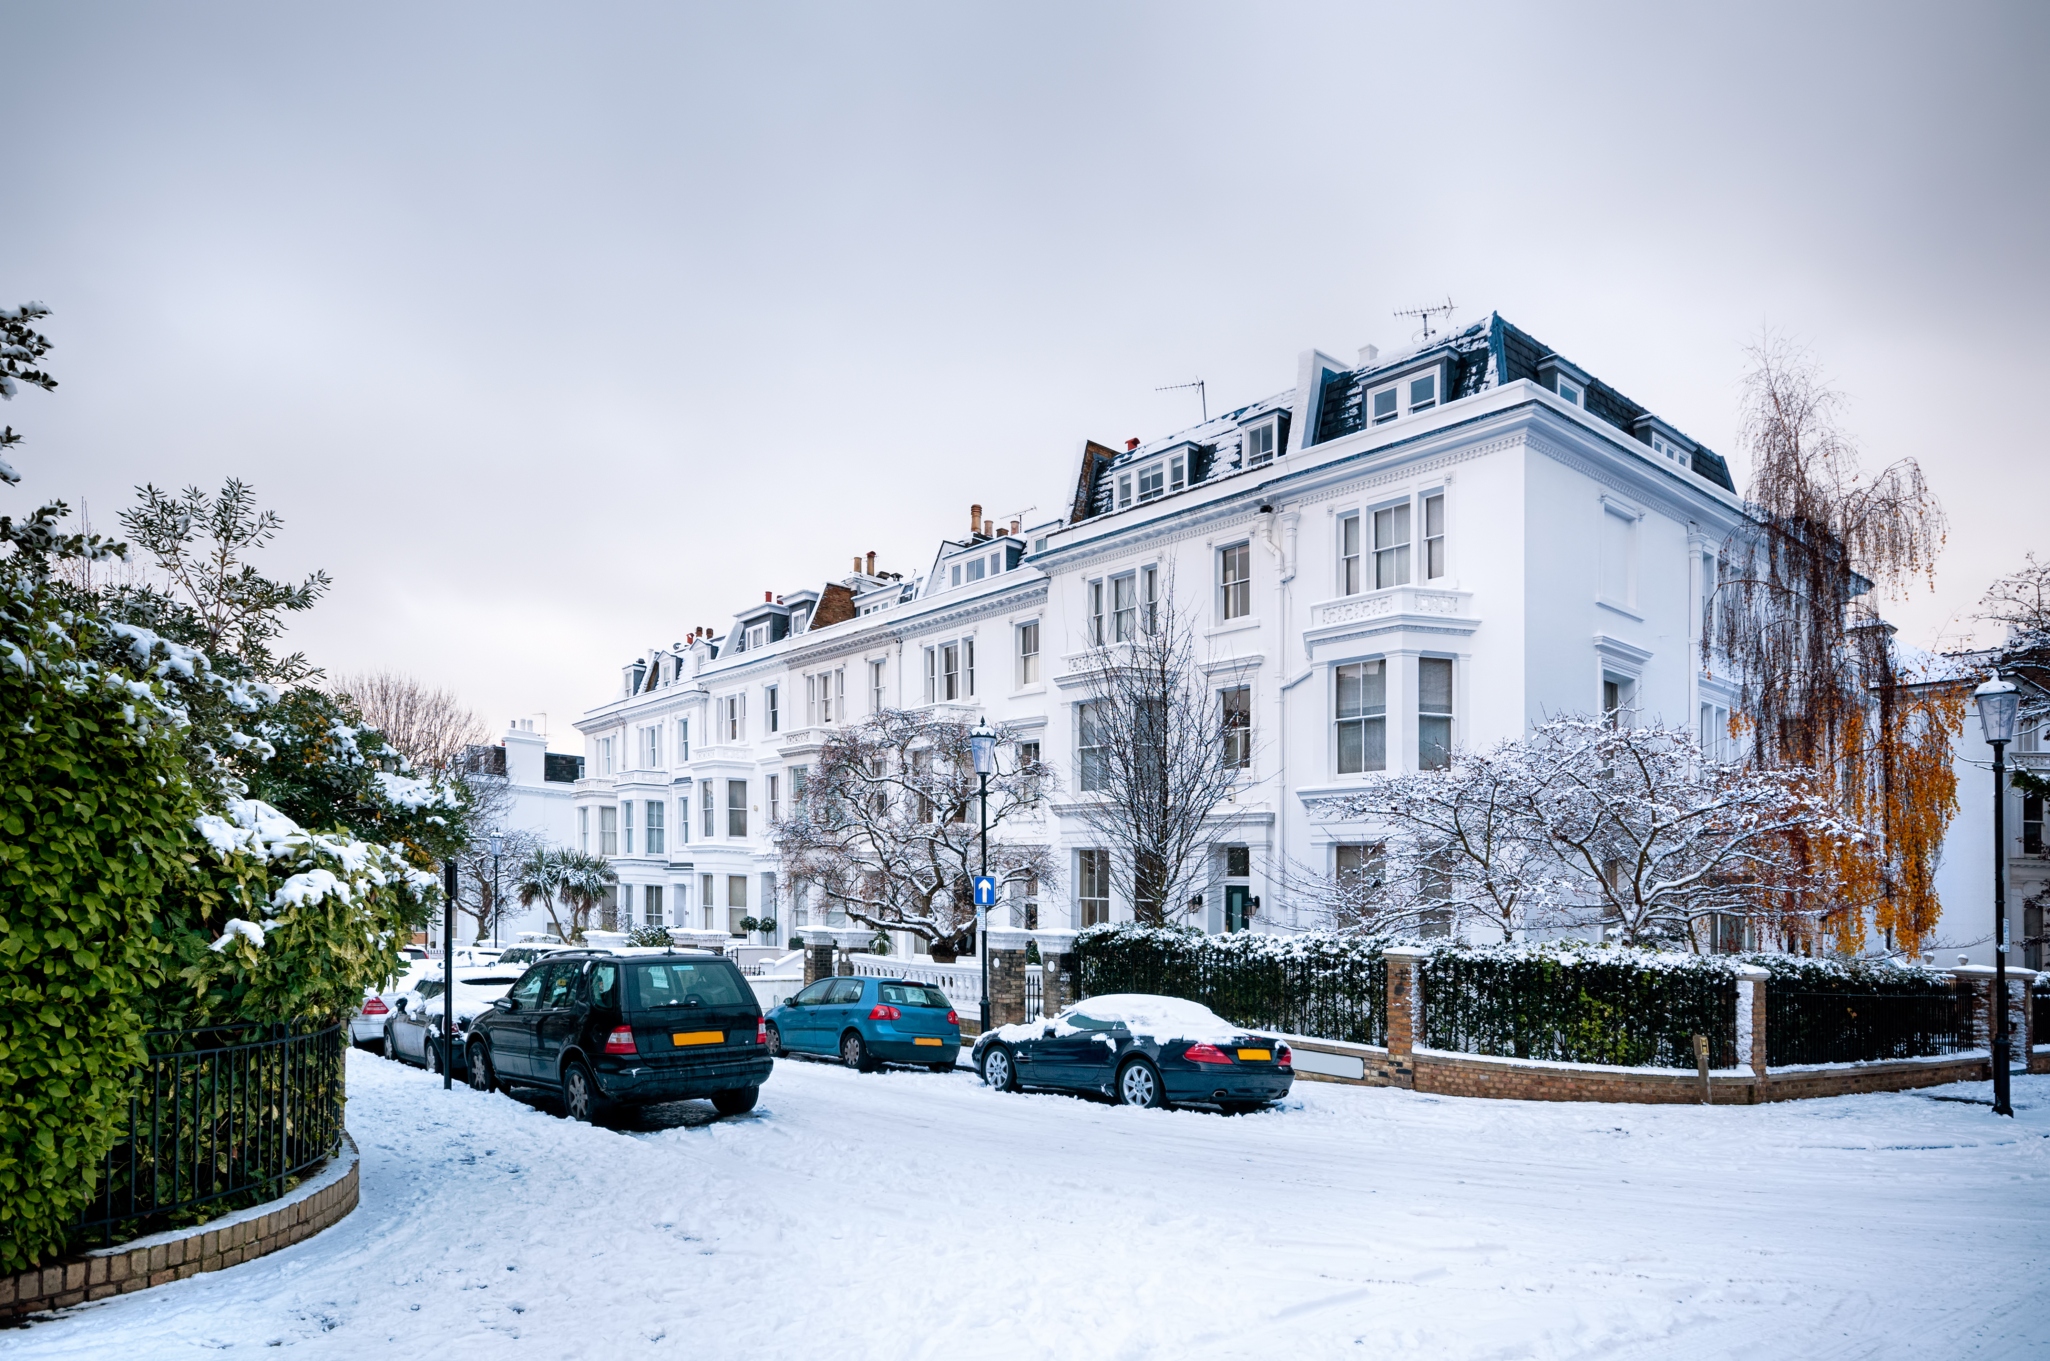 Snow covered street in Kensington